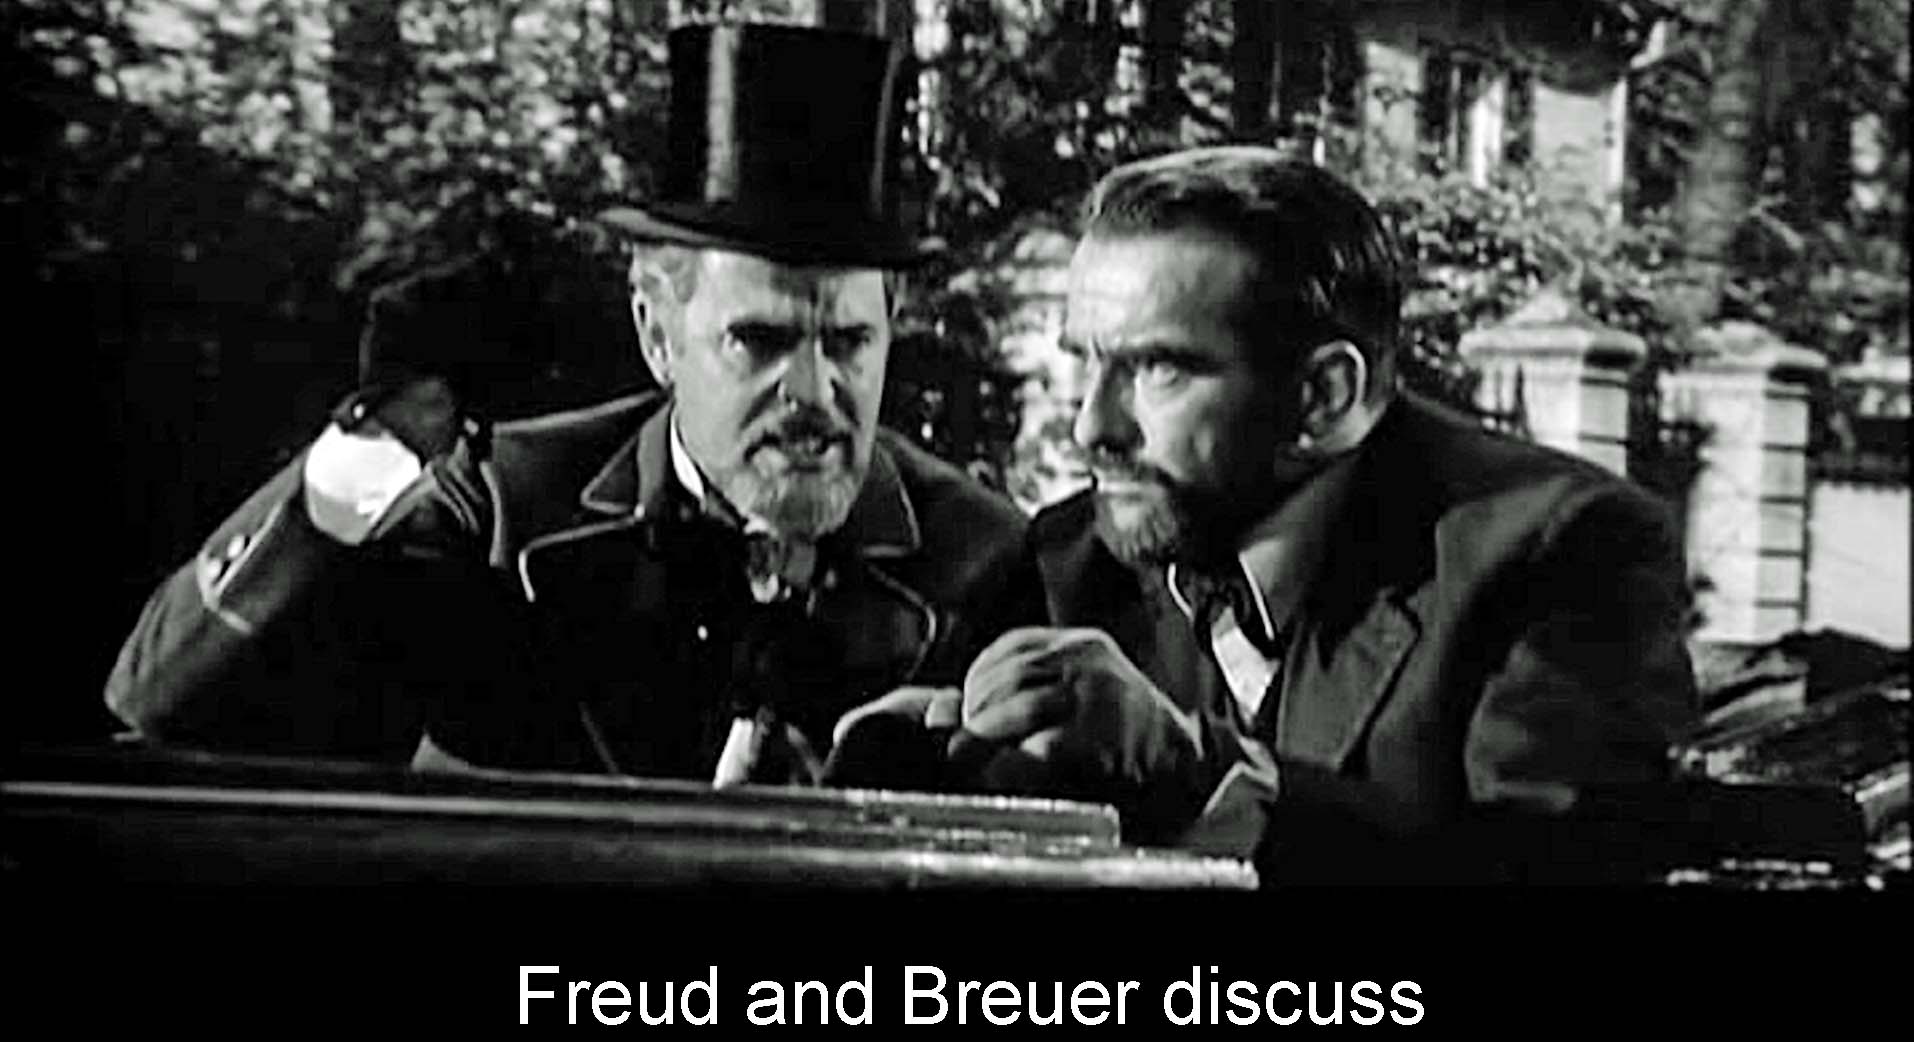 Freud and Breuer discuss